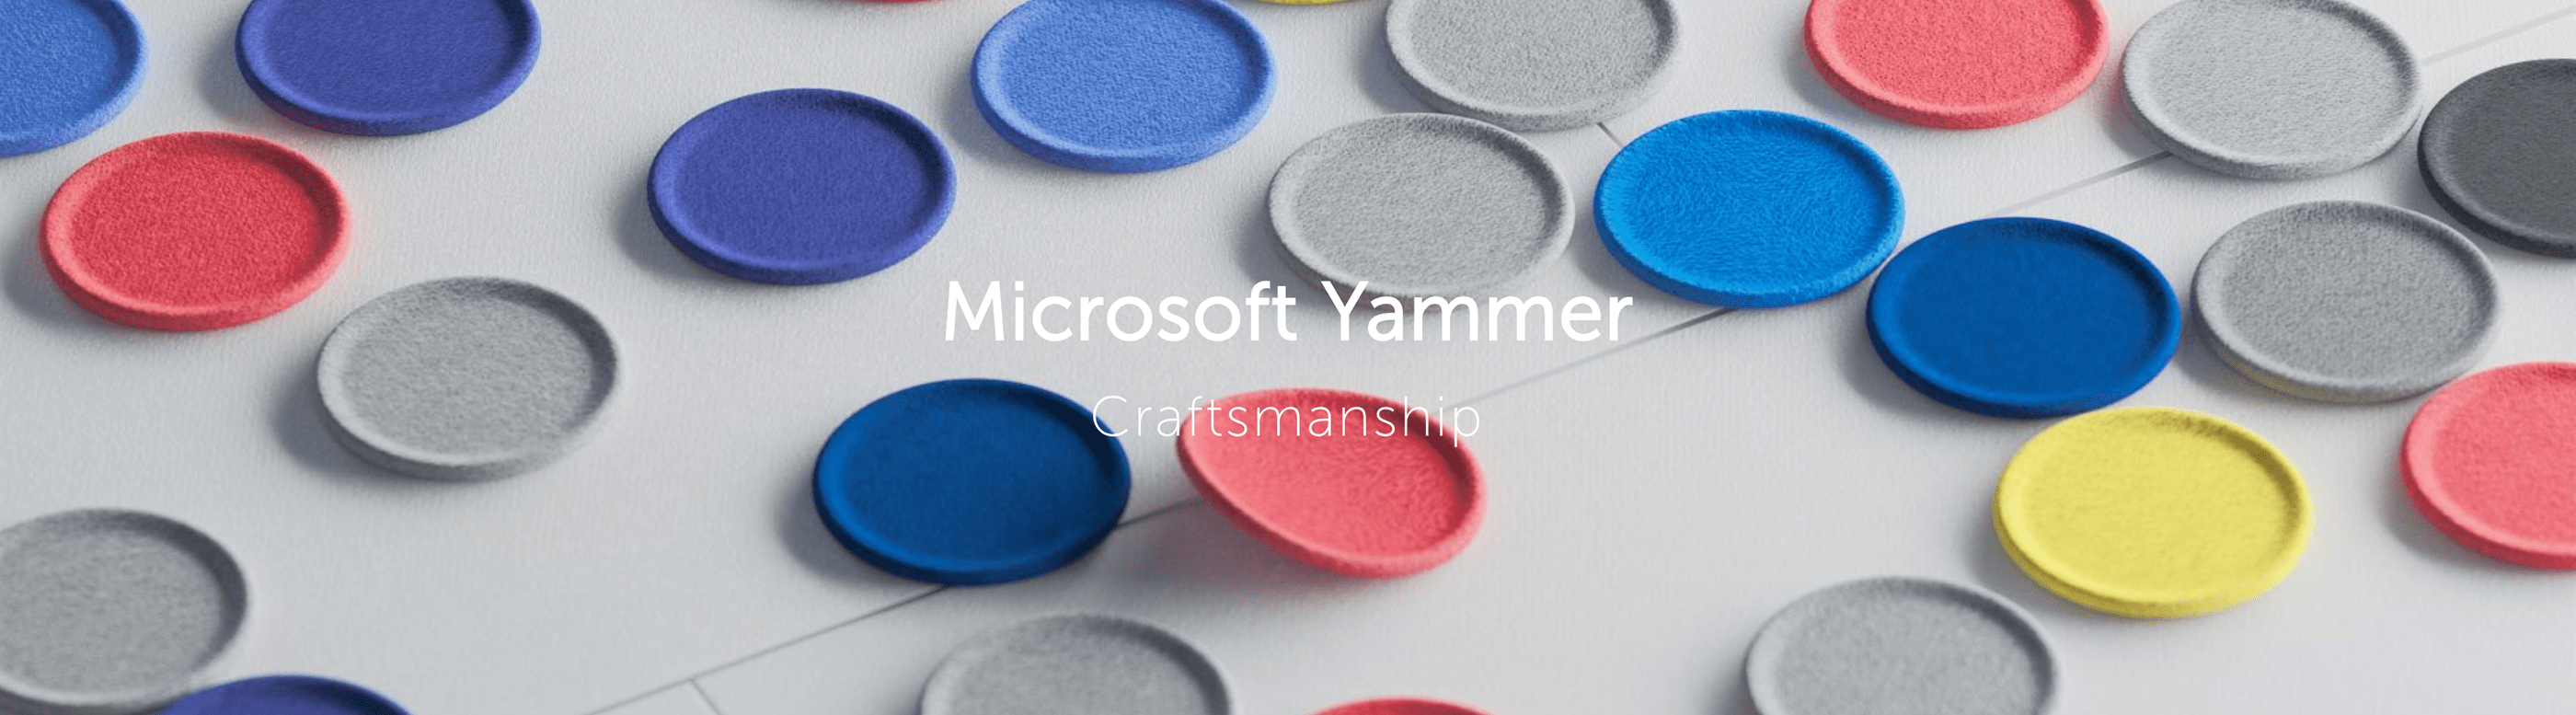 Microsoft Yammer | Craftsmanship on Behance70c0cc87698607.5dc1d832a3726.png